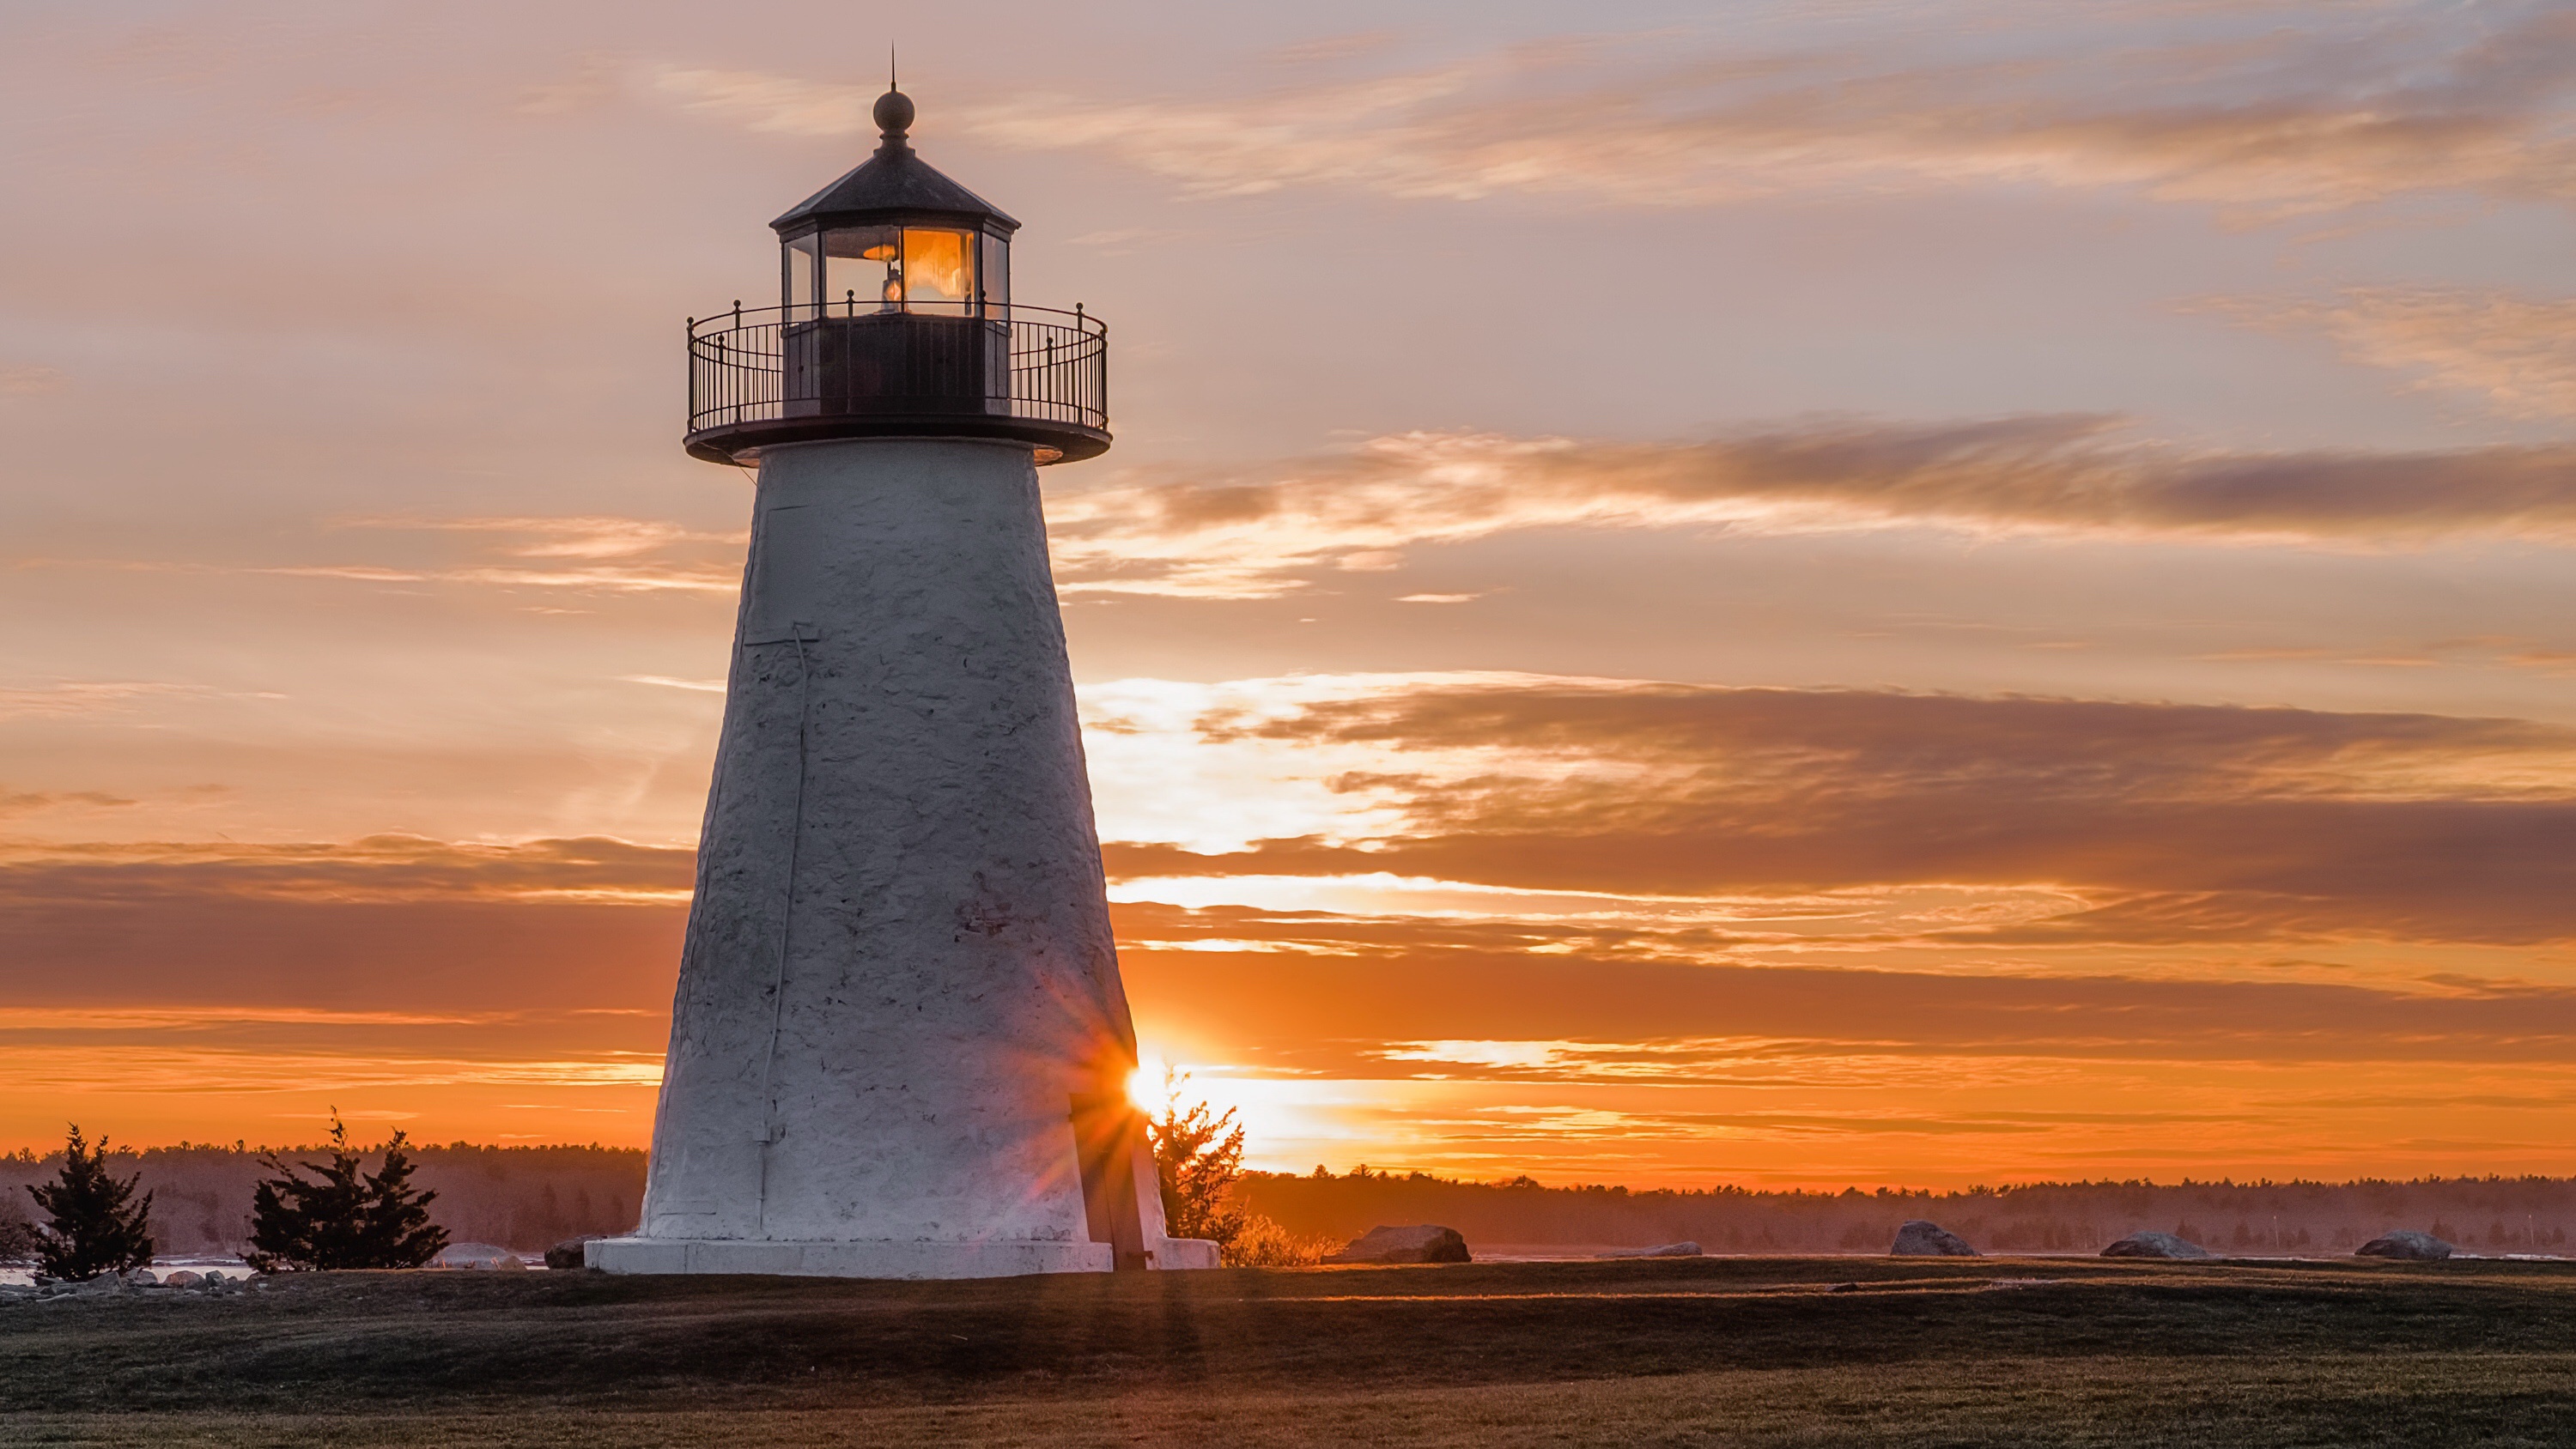 USA Massachusetts Sky Sunlight Lighthouse 3000x1688